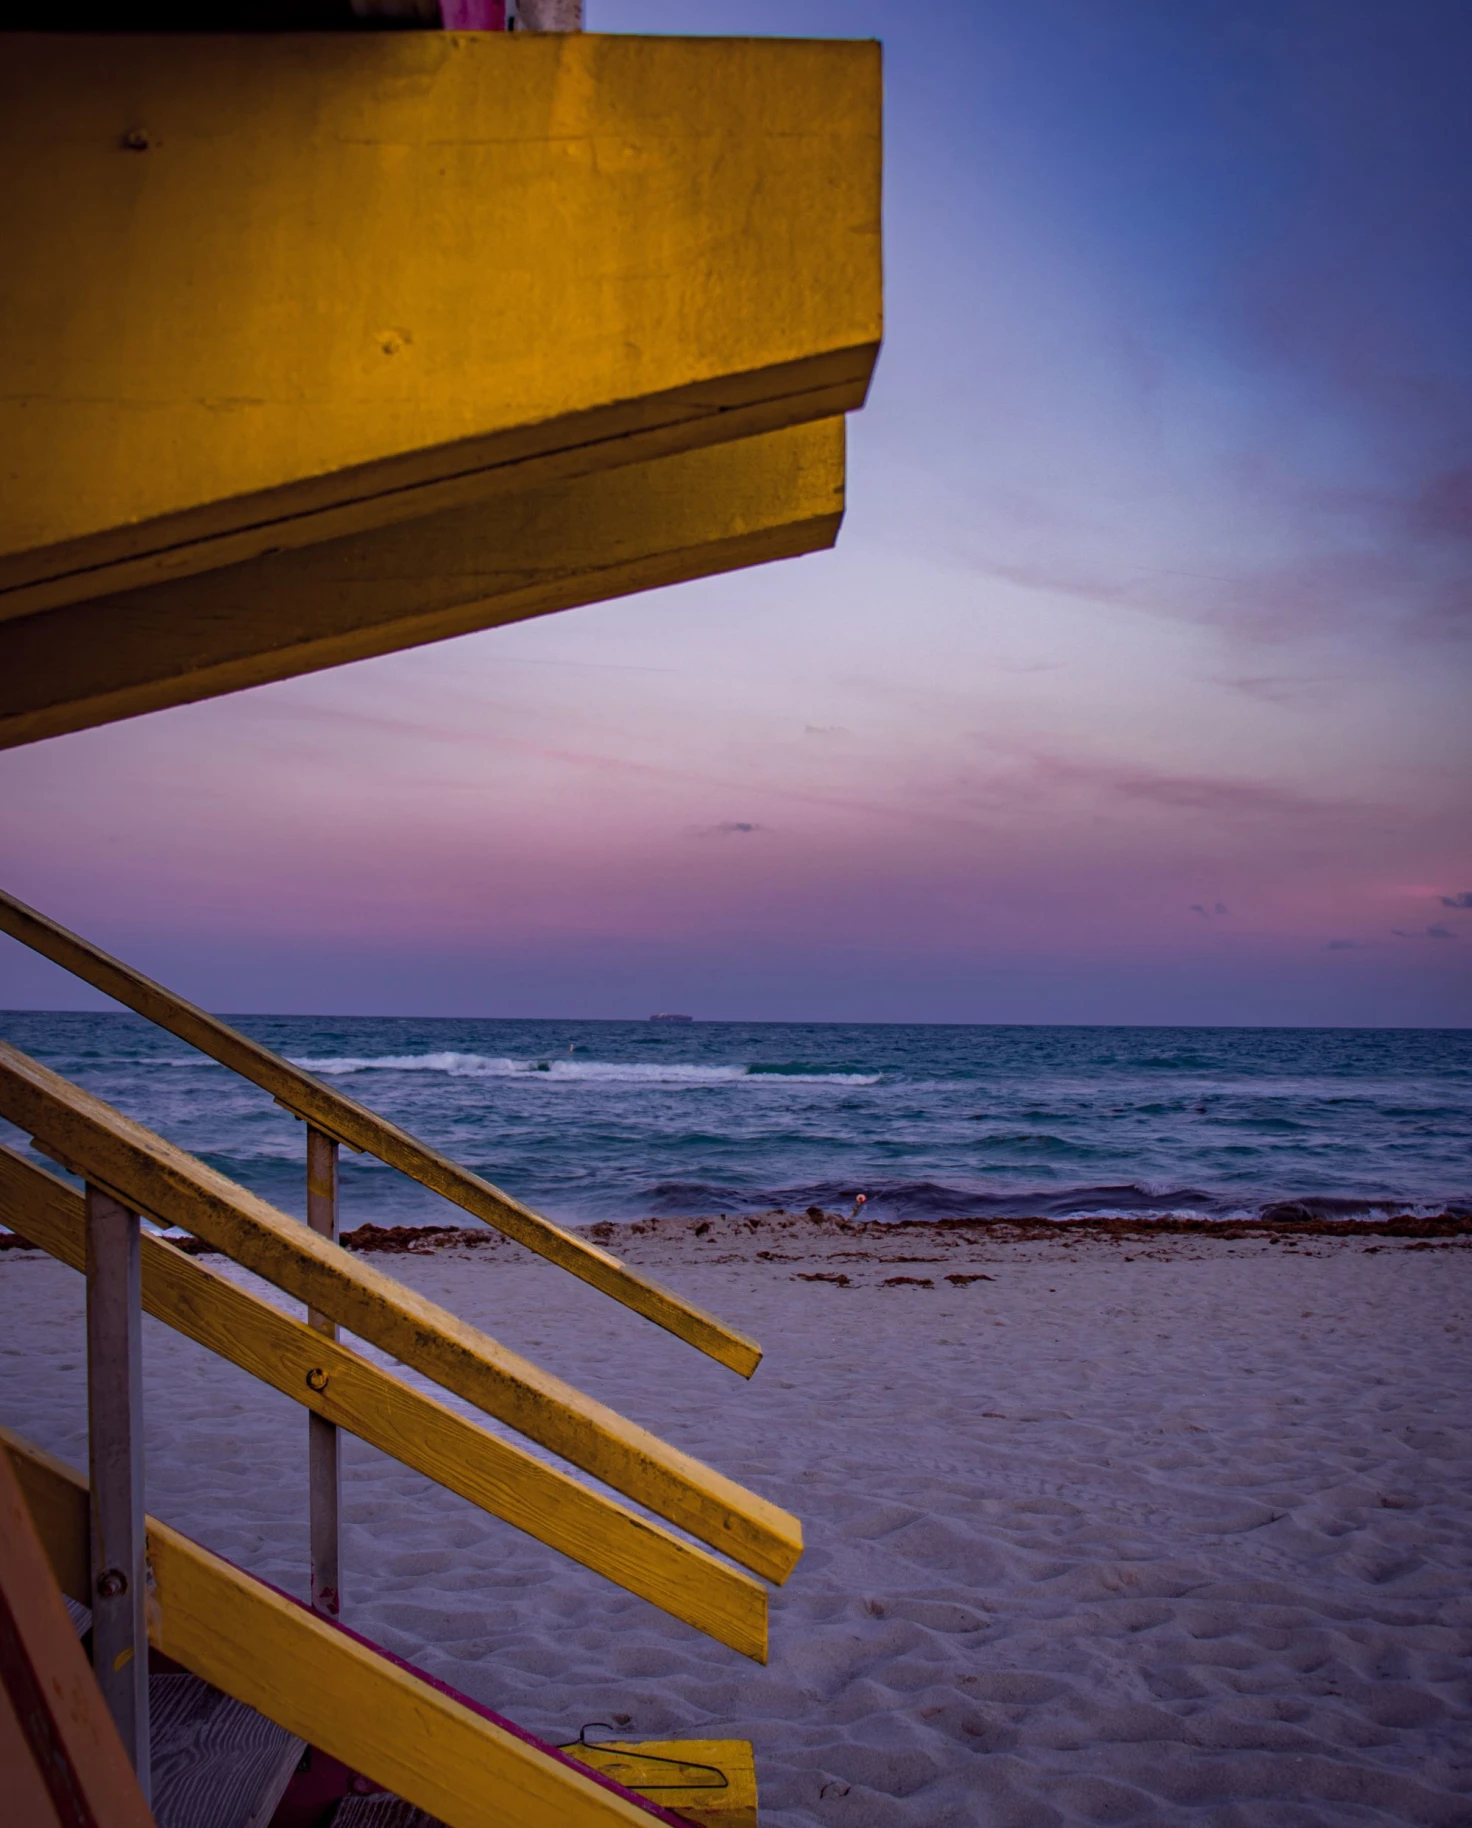 purple sunset on the beach next to yellow lifeguard stand